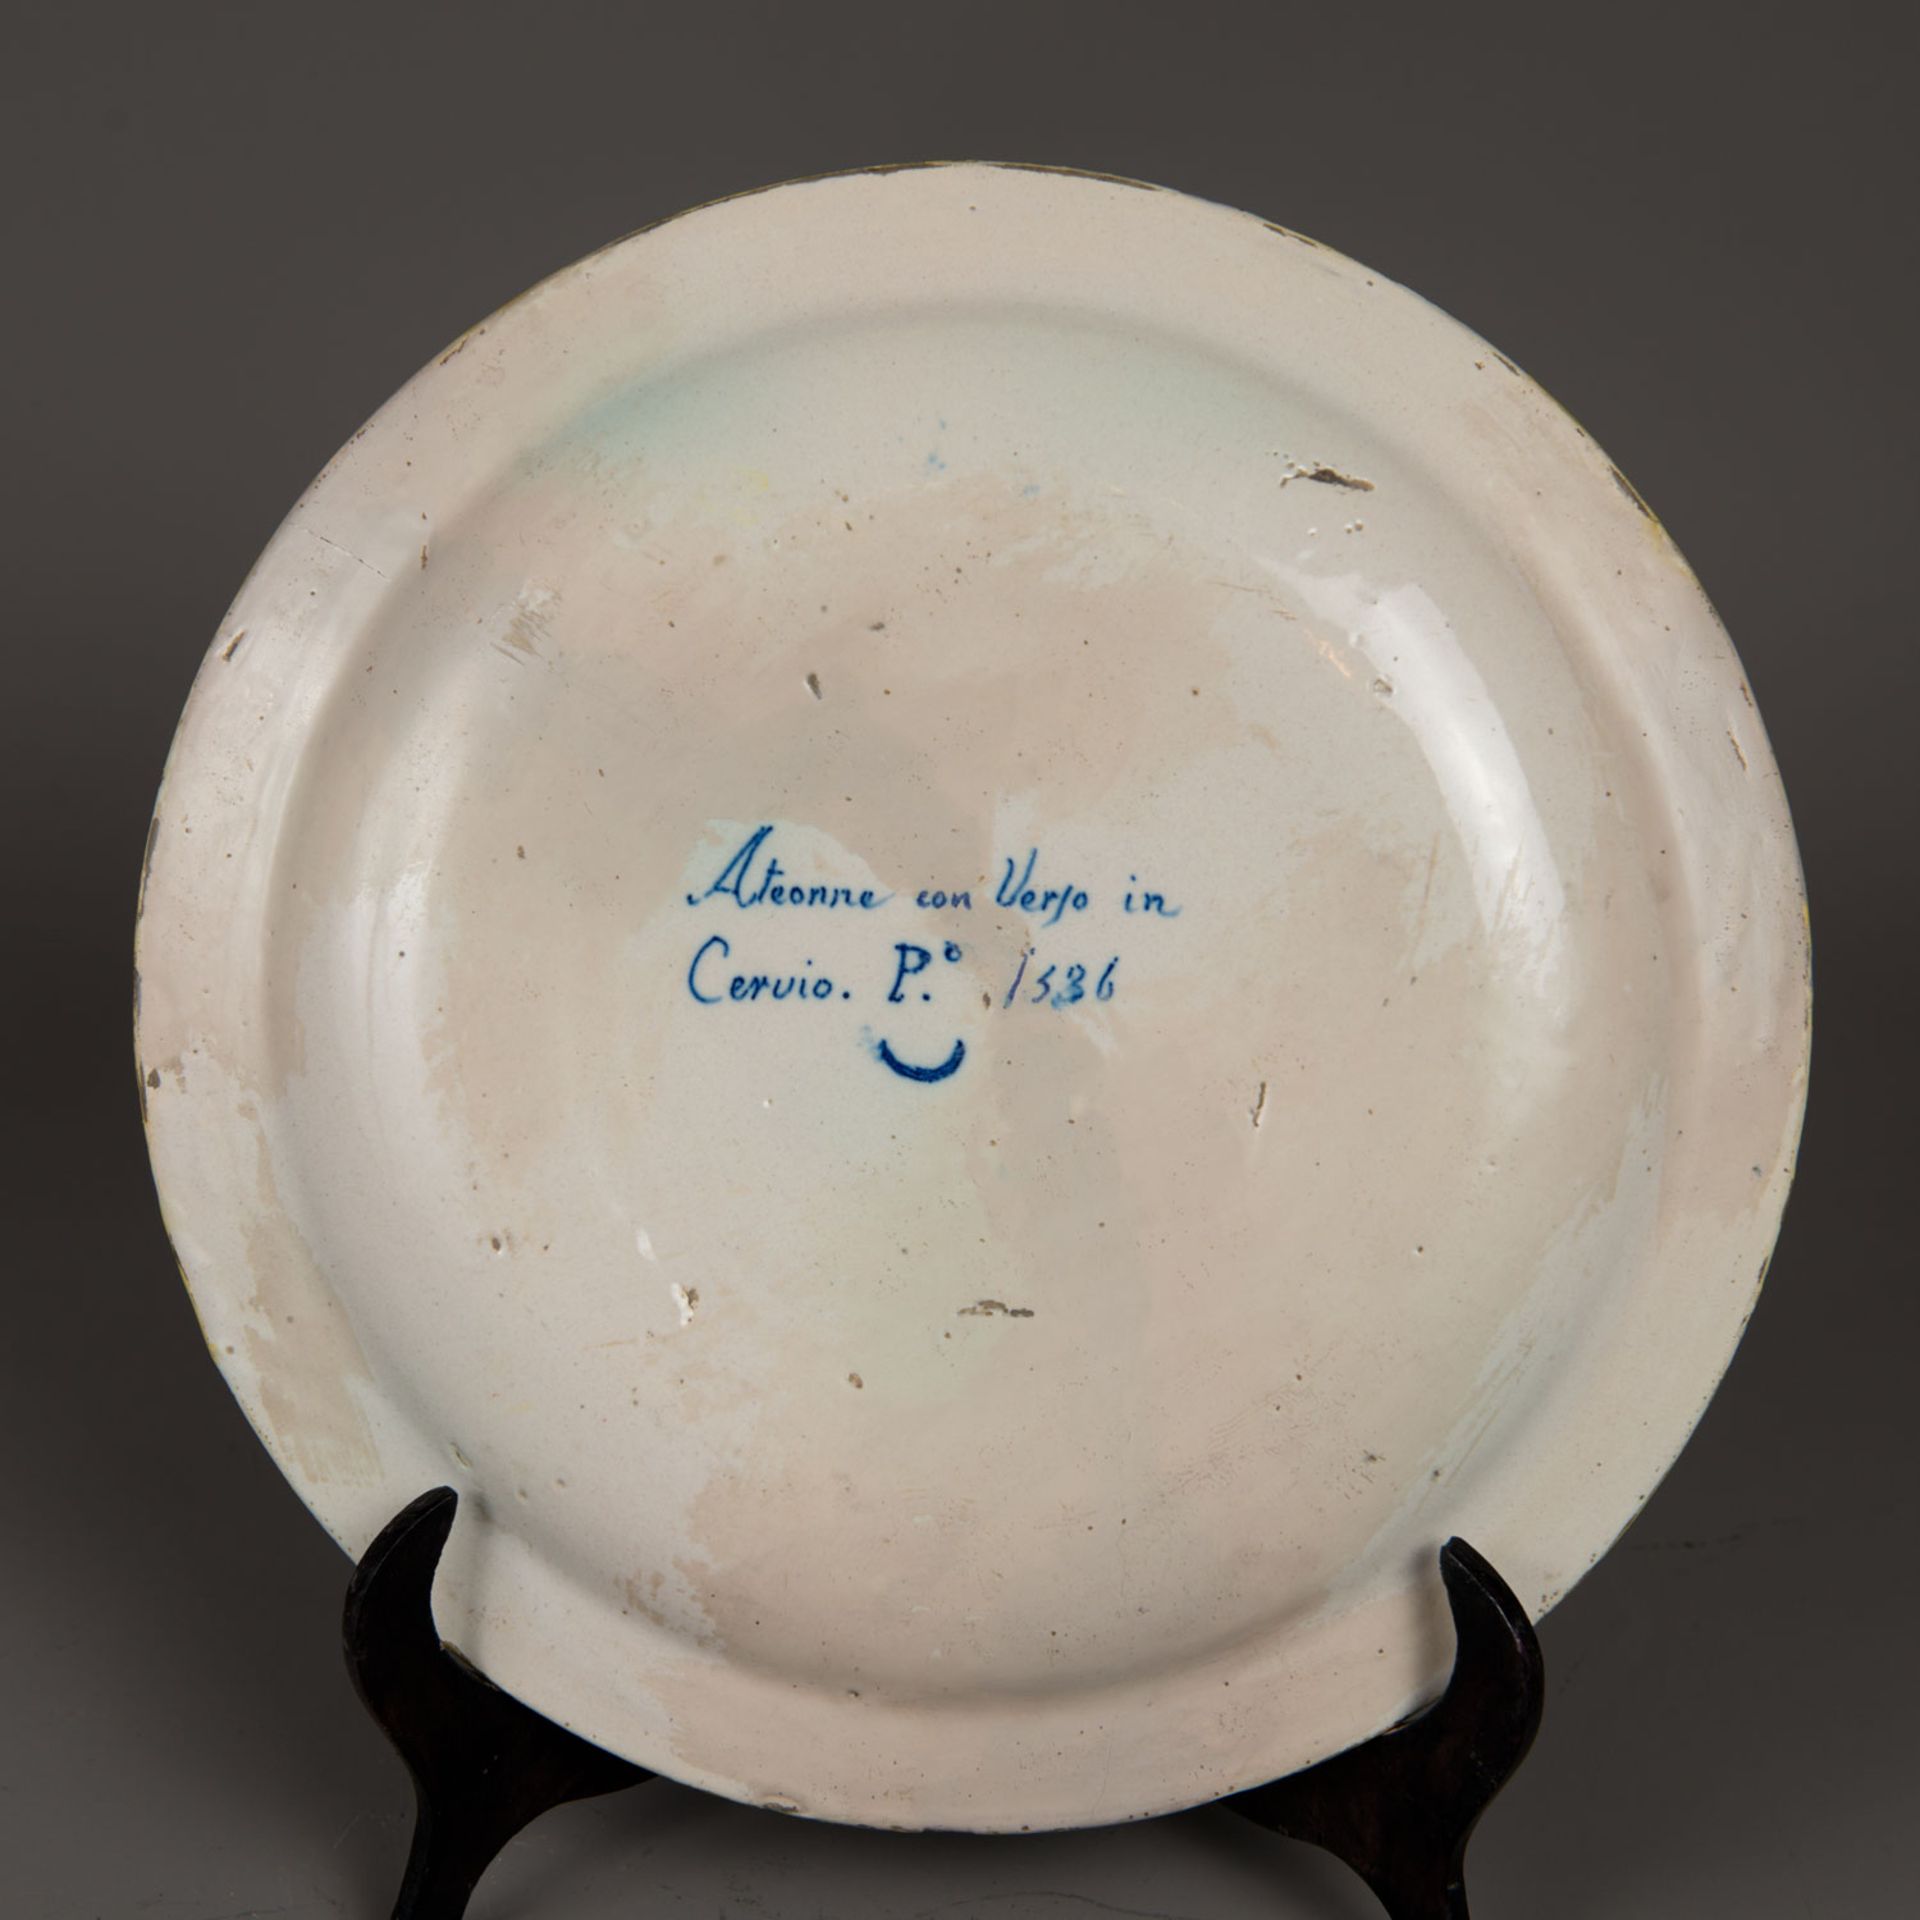 Urbino ceramic dish - Image 2 of 2